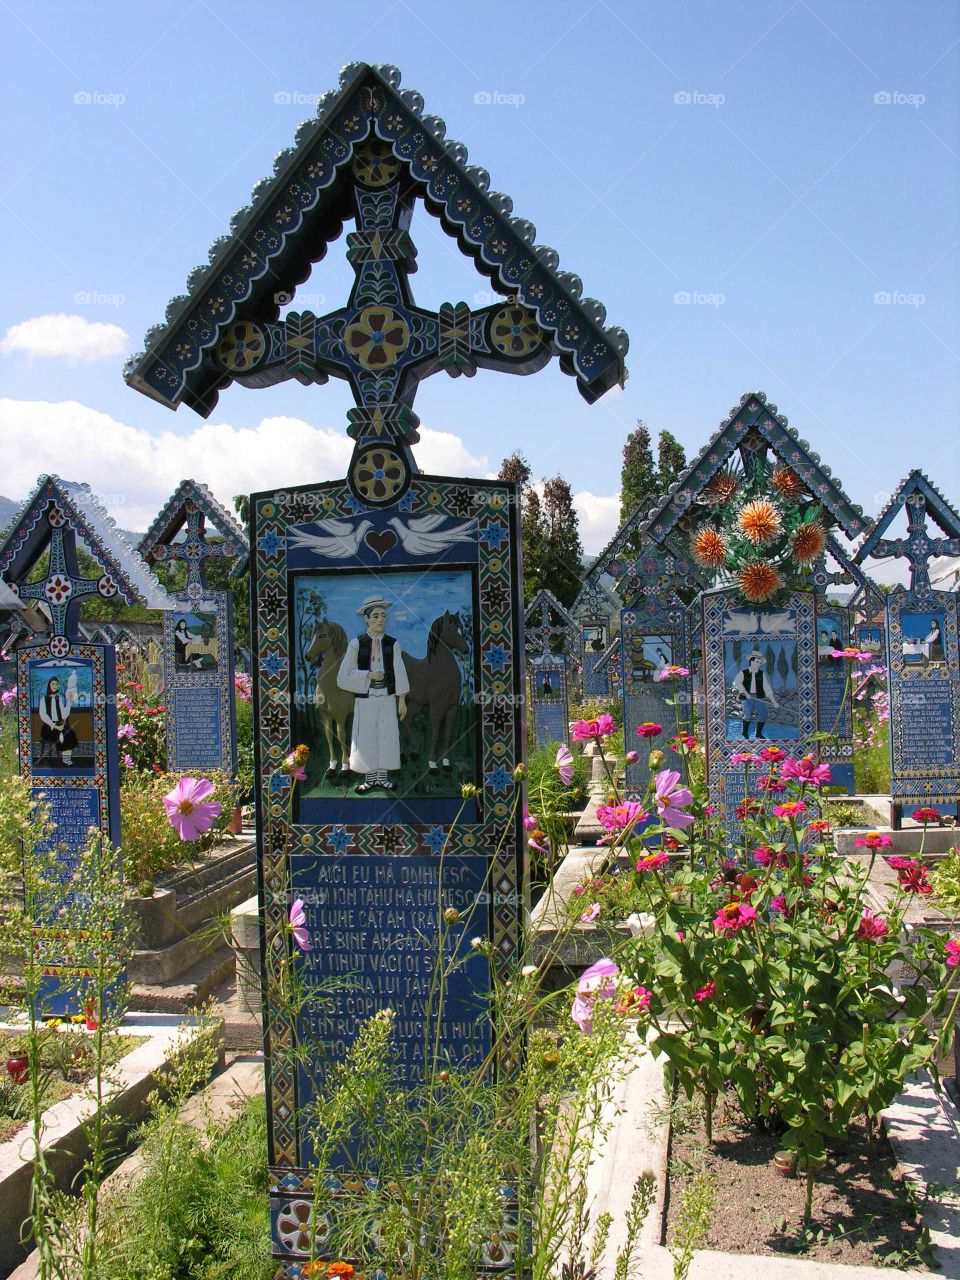 The Merry Cemetery